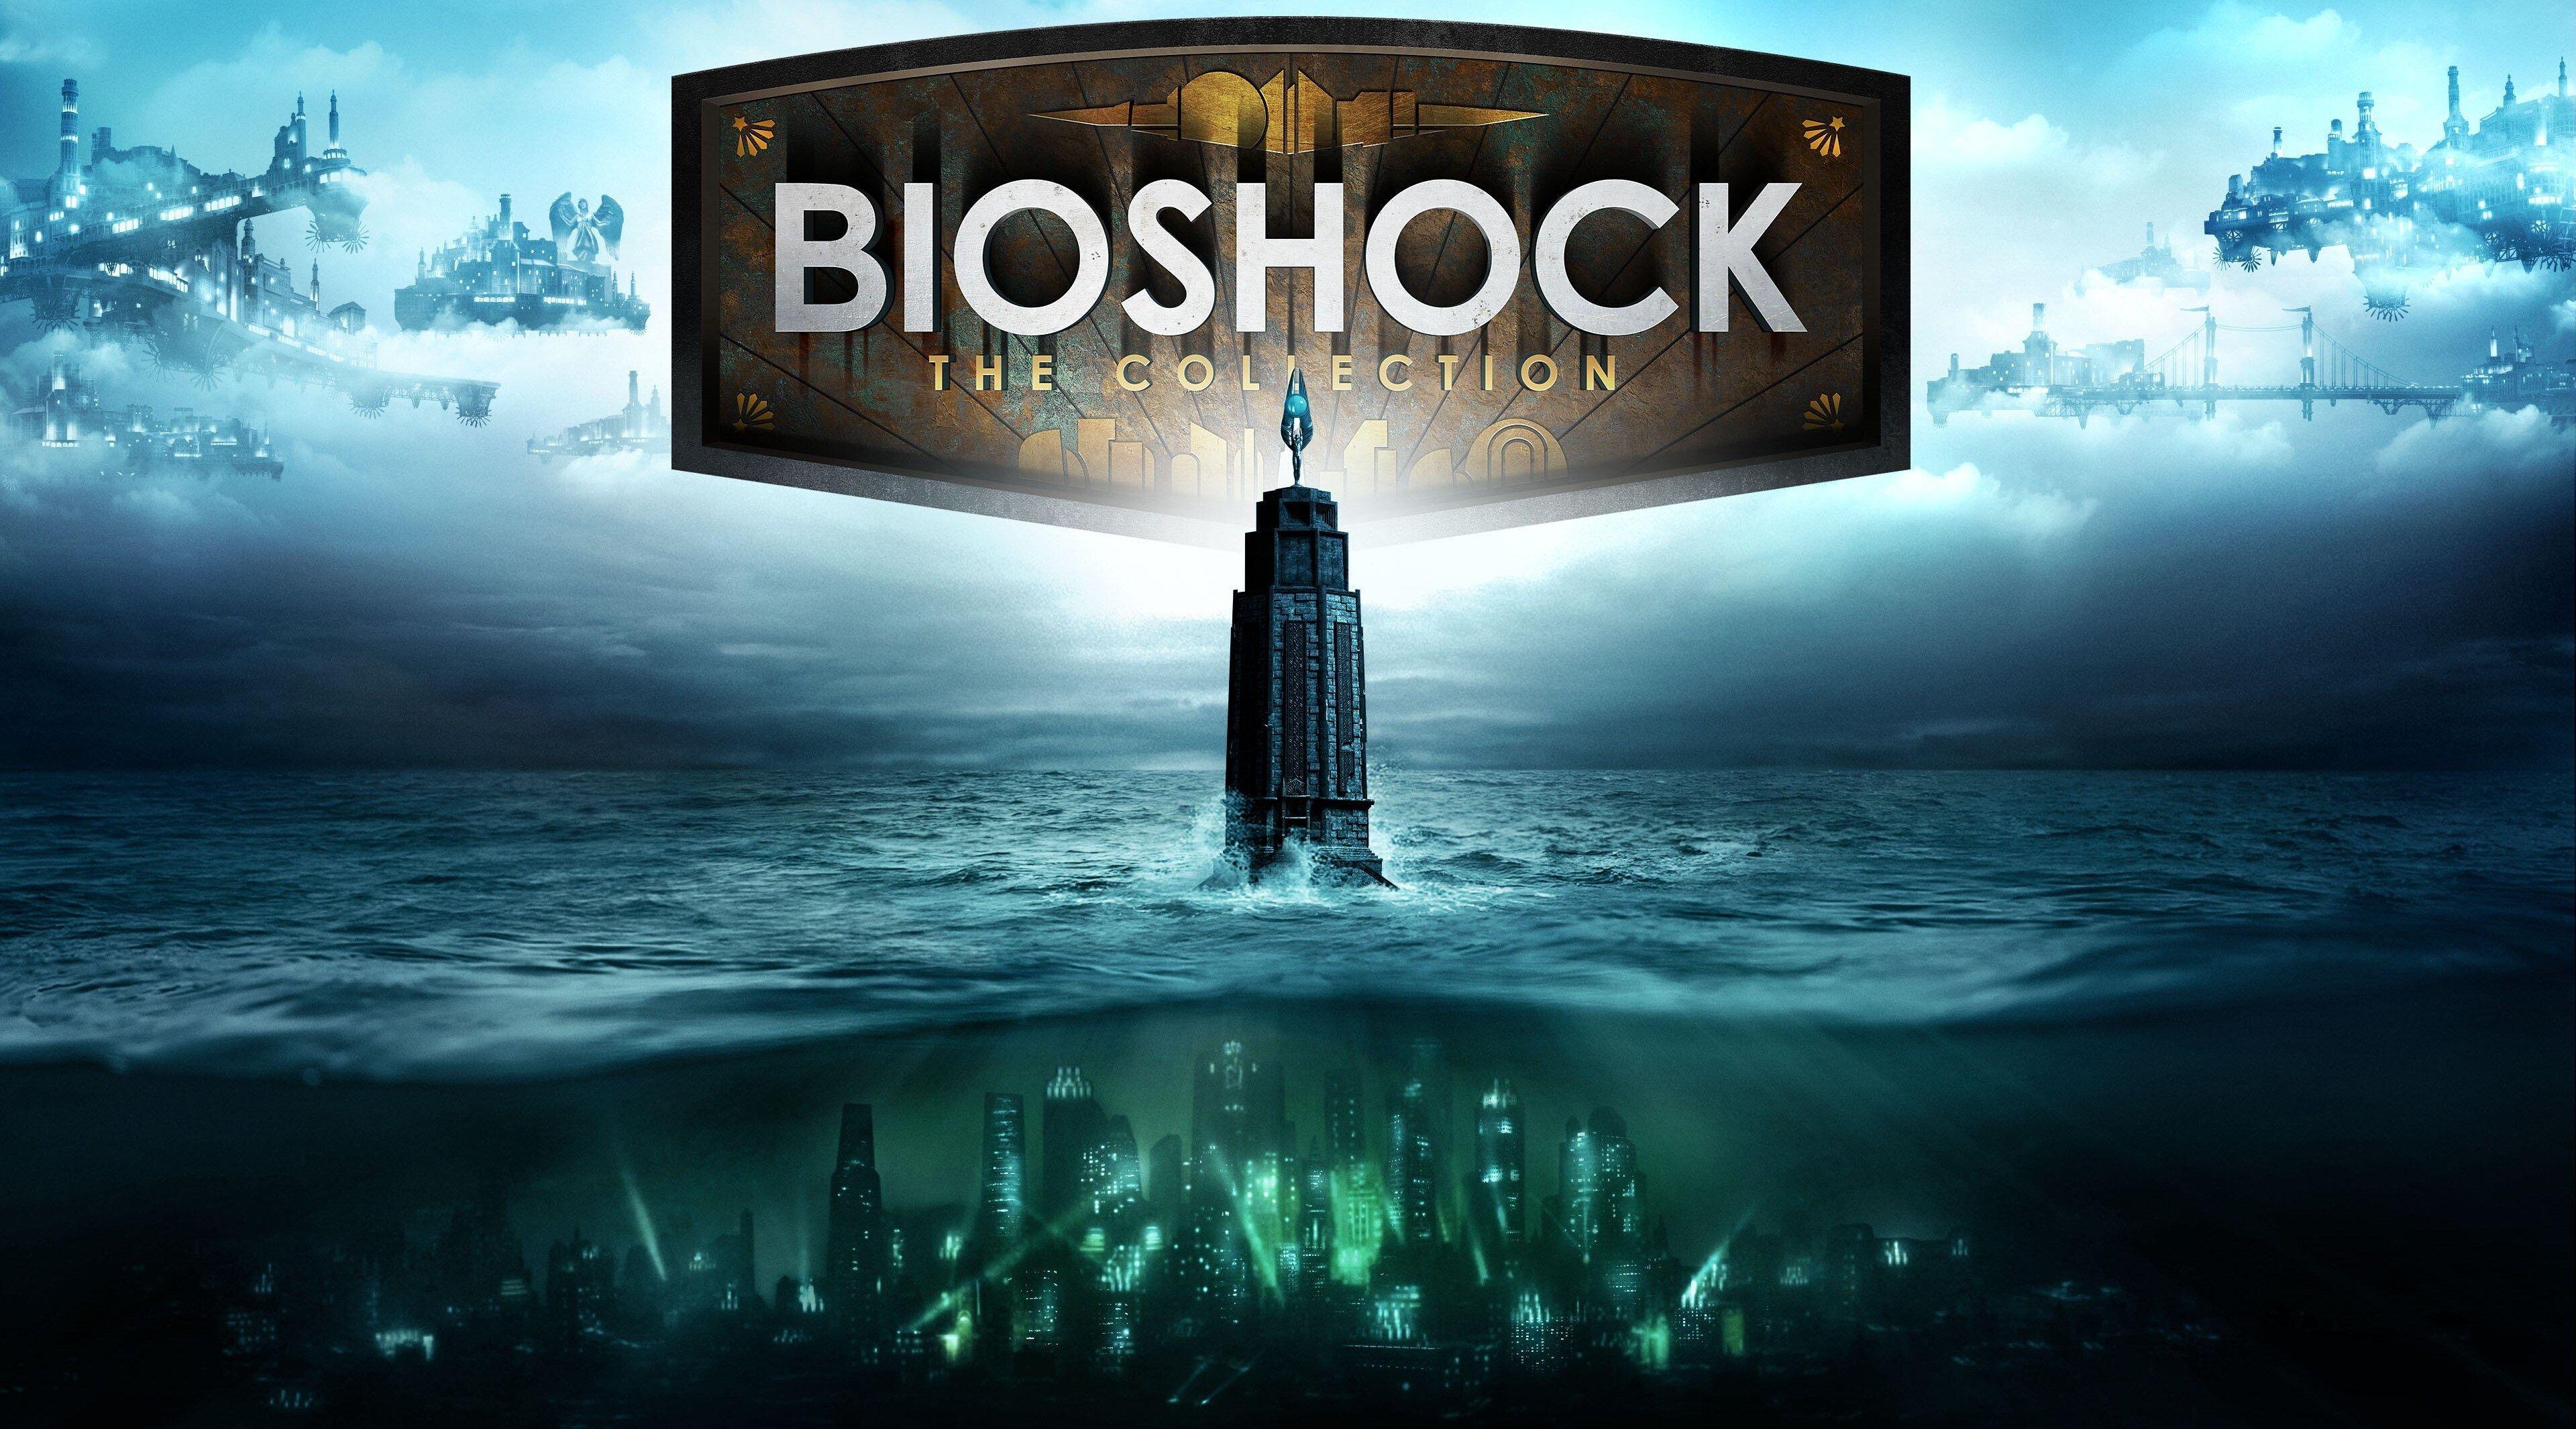 BioShock 4K Wallpapers - Top Free